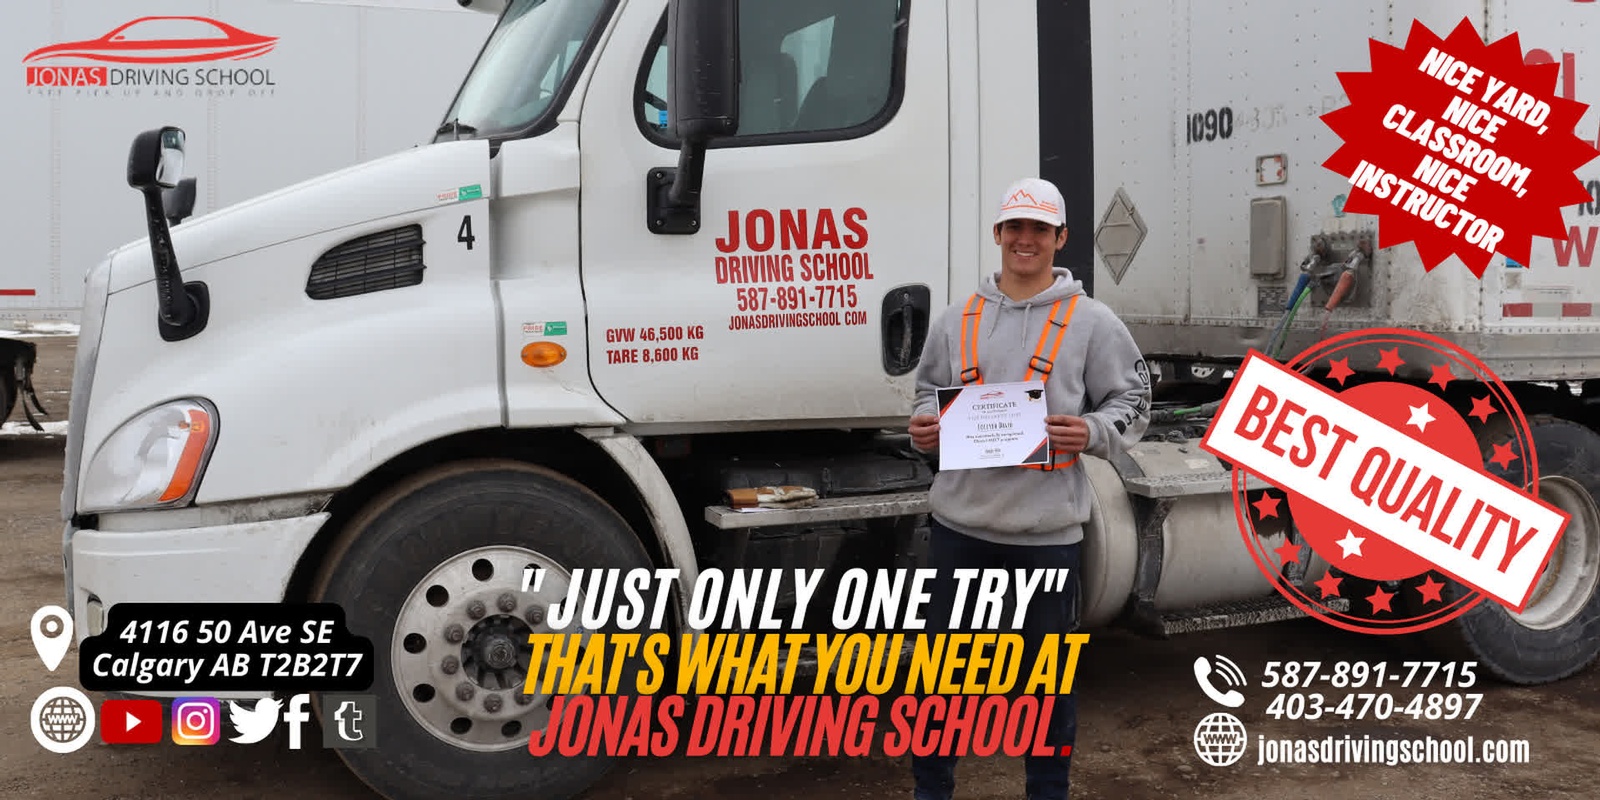 Jonas Driving School March 25